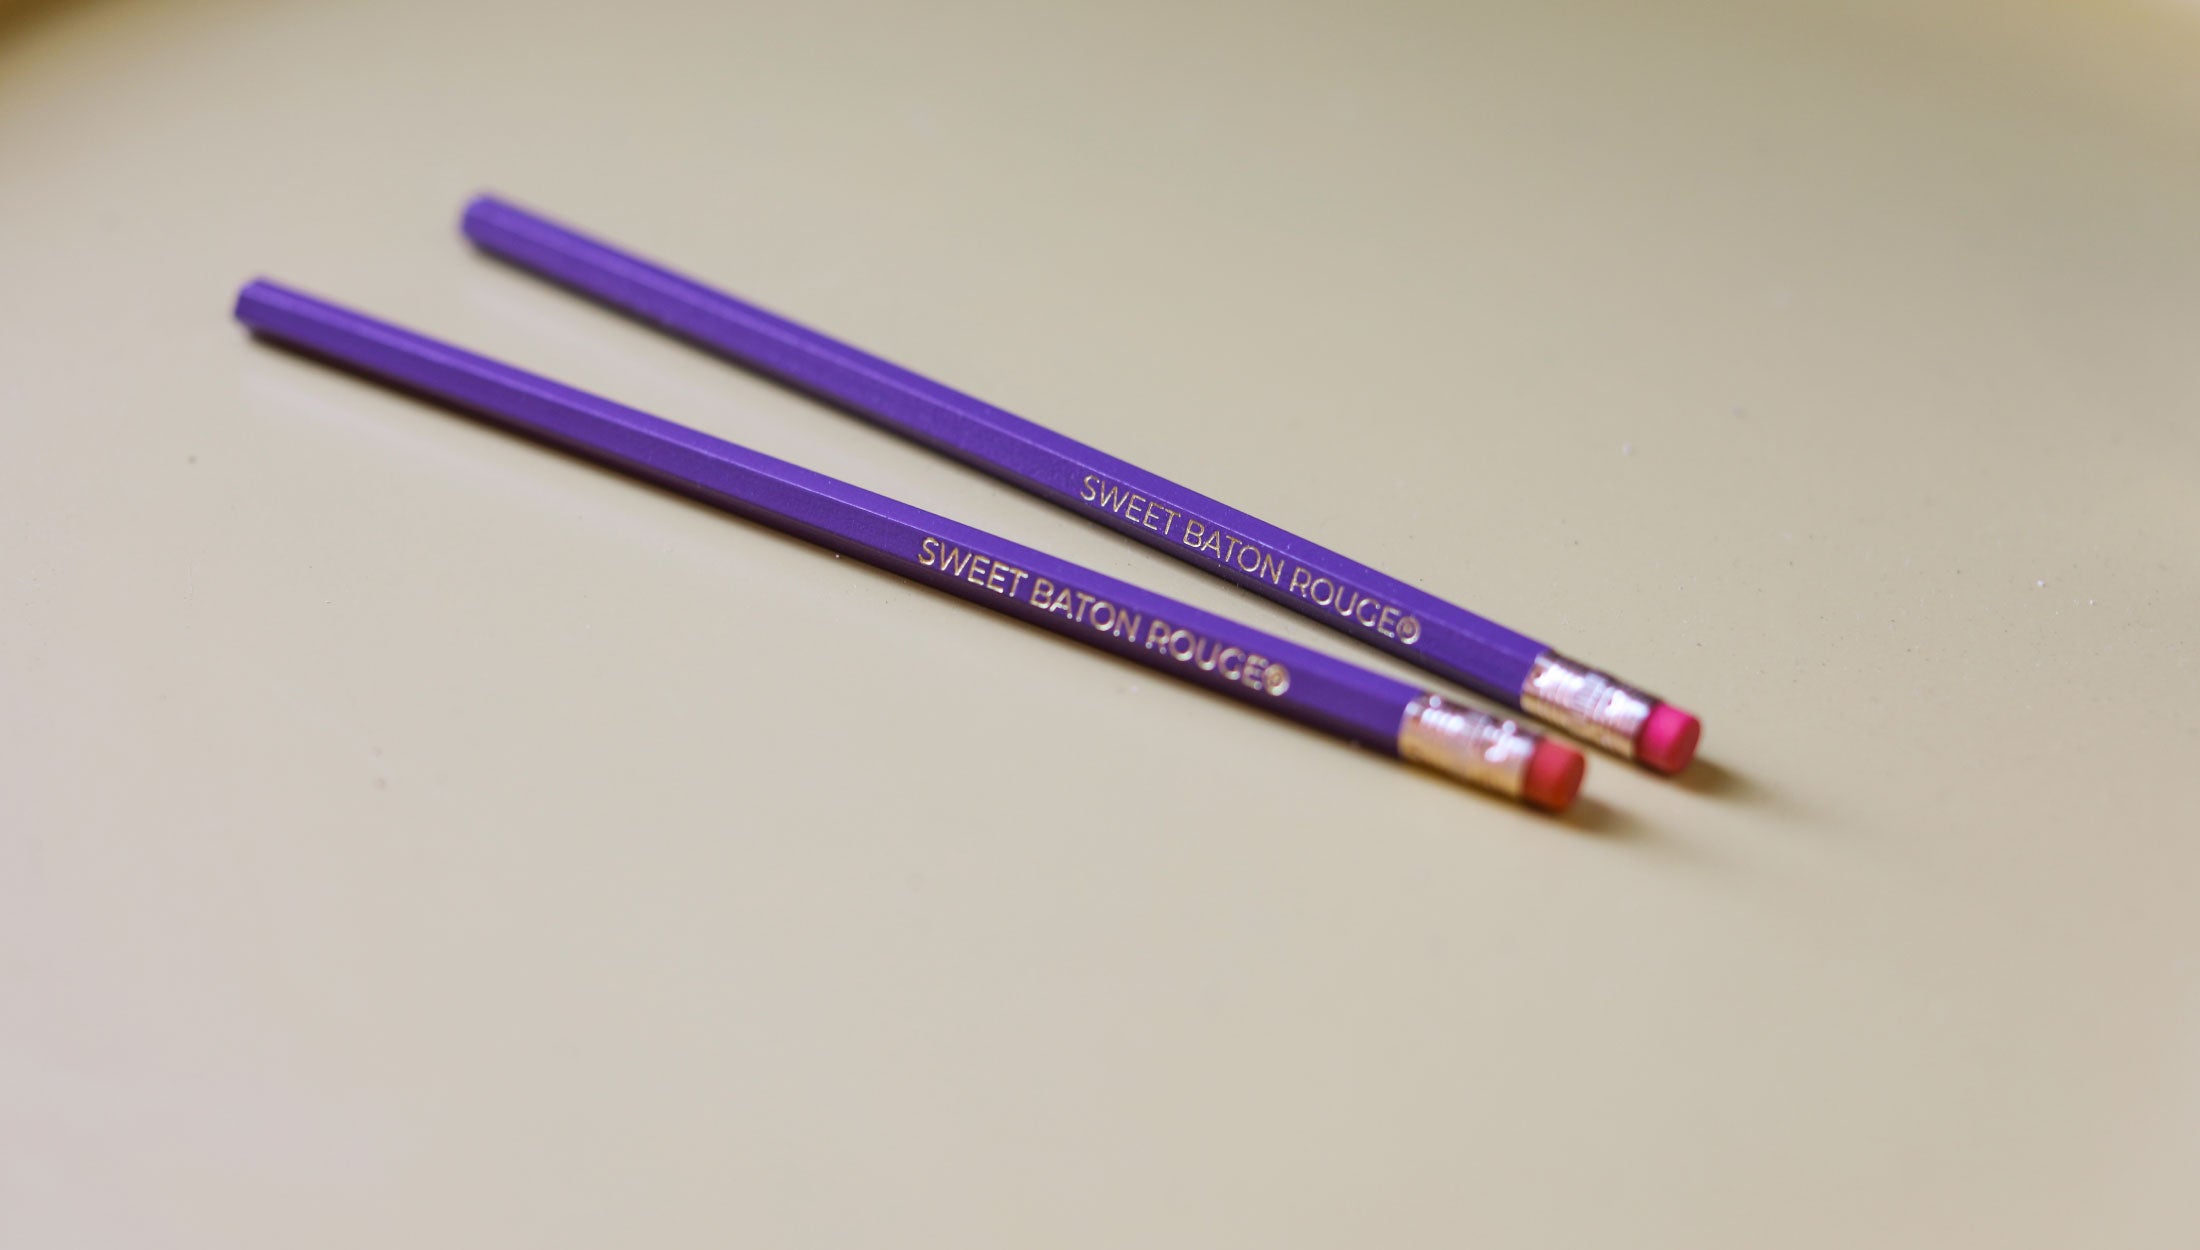 My Sweet Baton Rouge Wooden Pencils